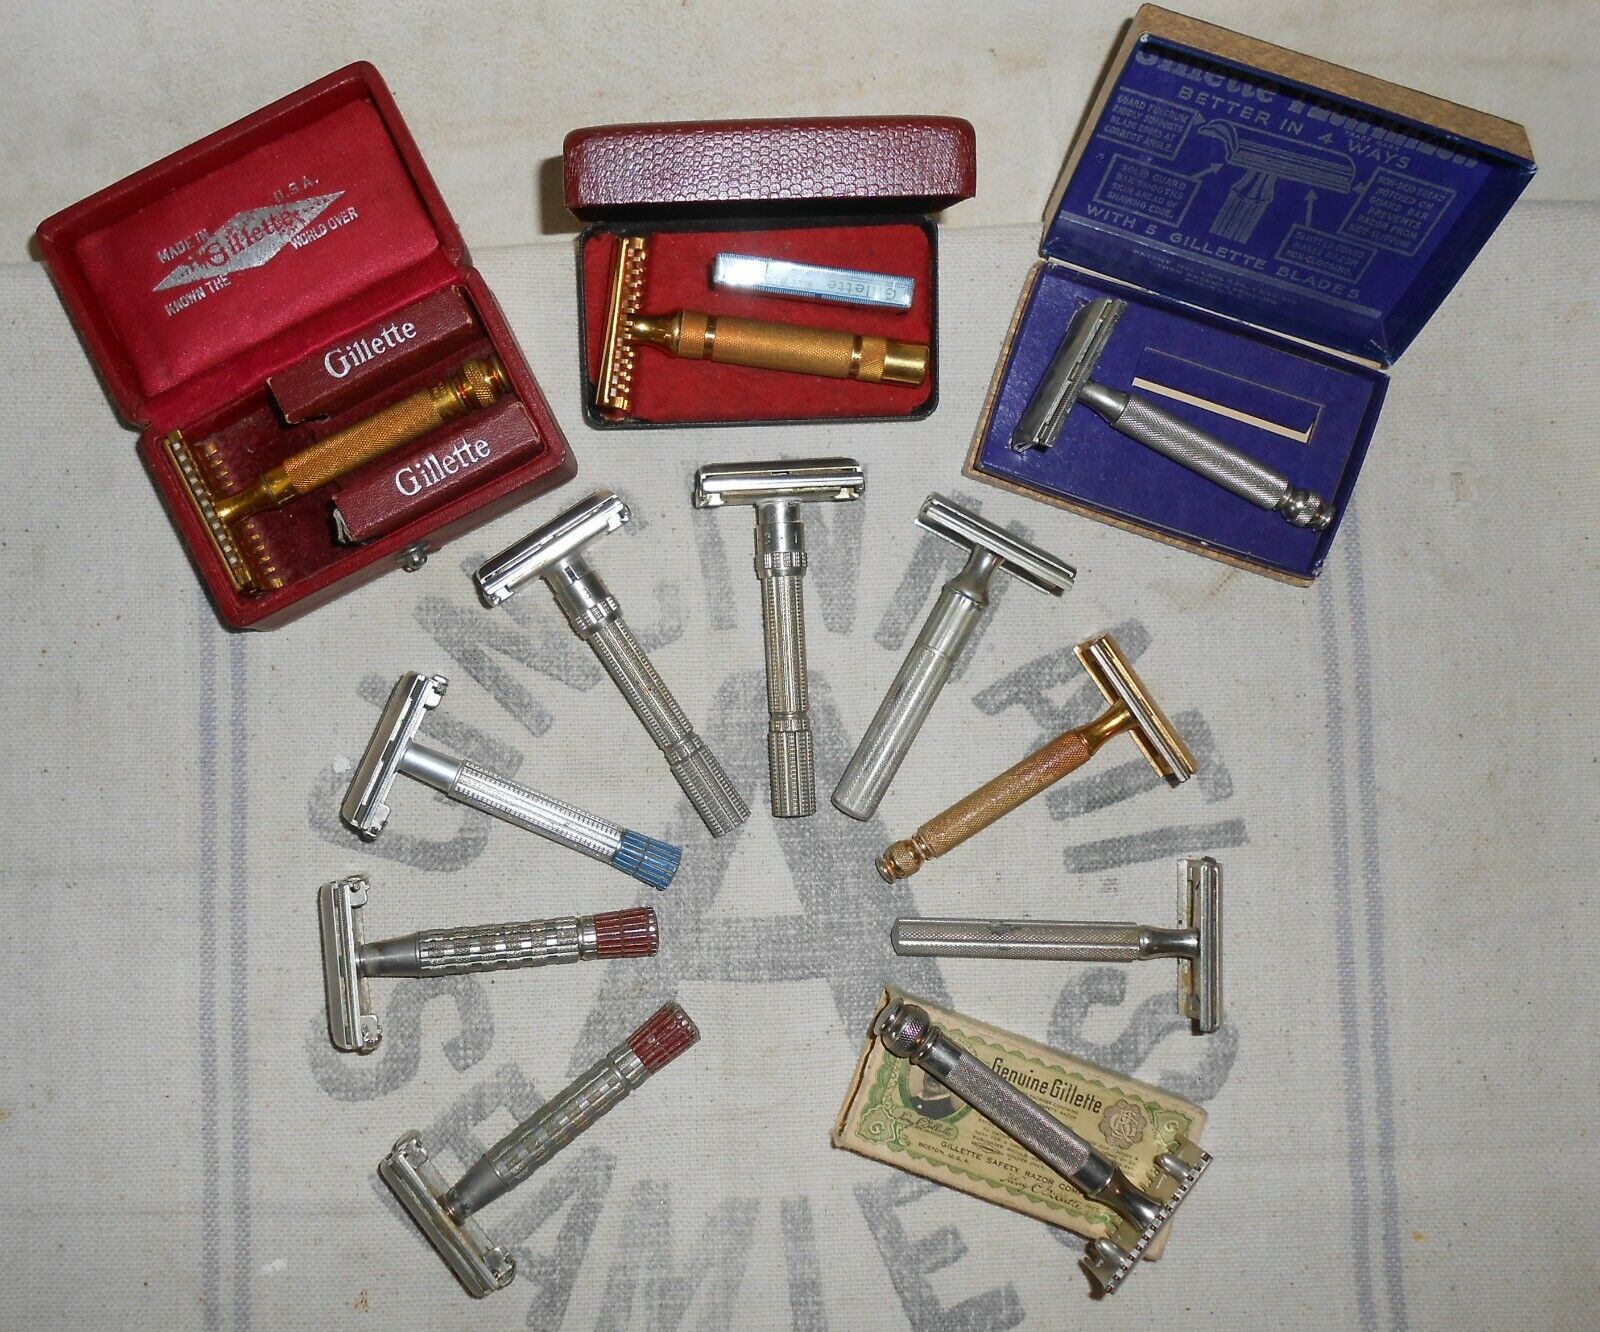 12 all GILLETTE Safety Razors 1930's-60's Comb Blue Red Tip Adj Tech Aristocrat Gillette